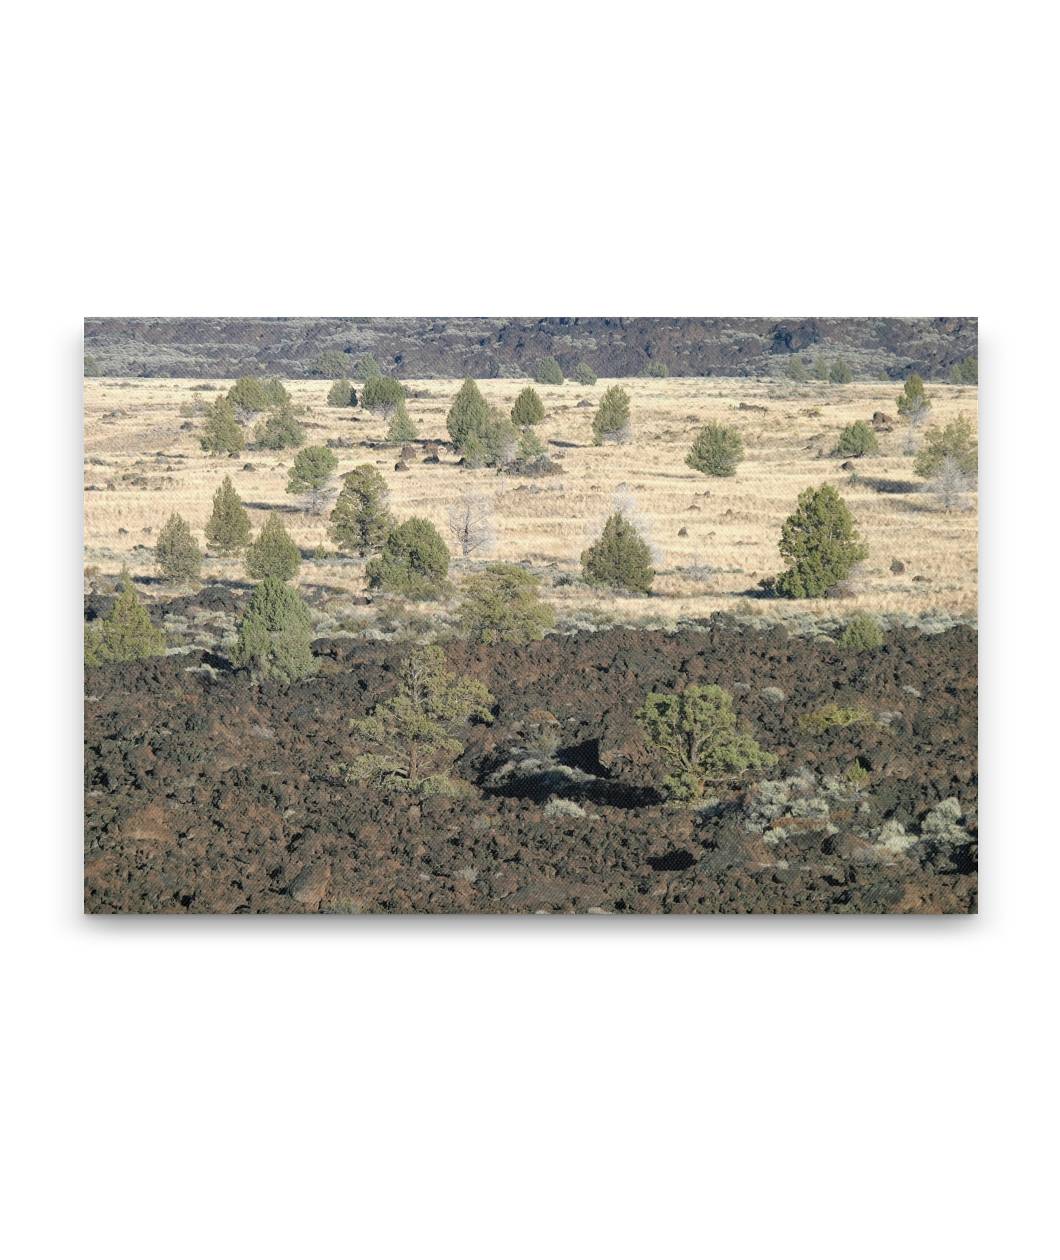 Western juniper savanna and lava flow, Lava Beds National Monument, California